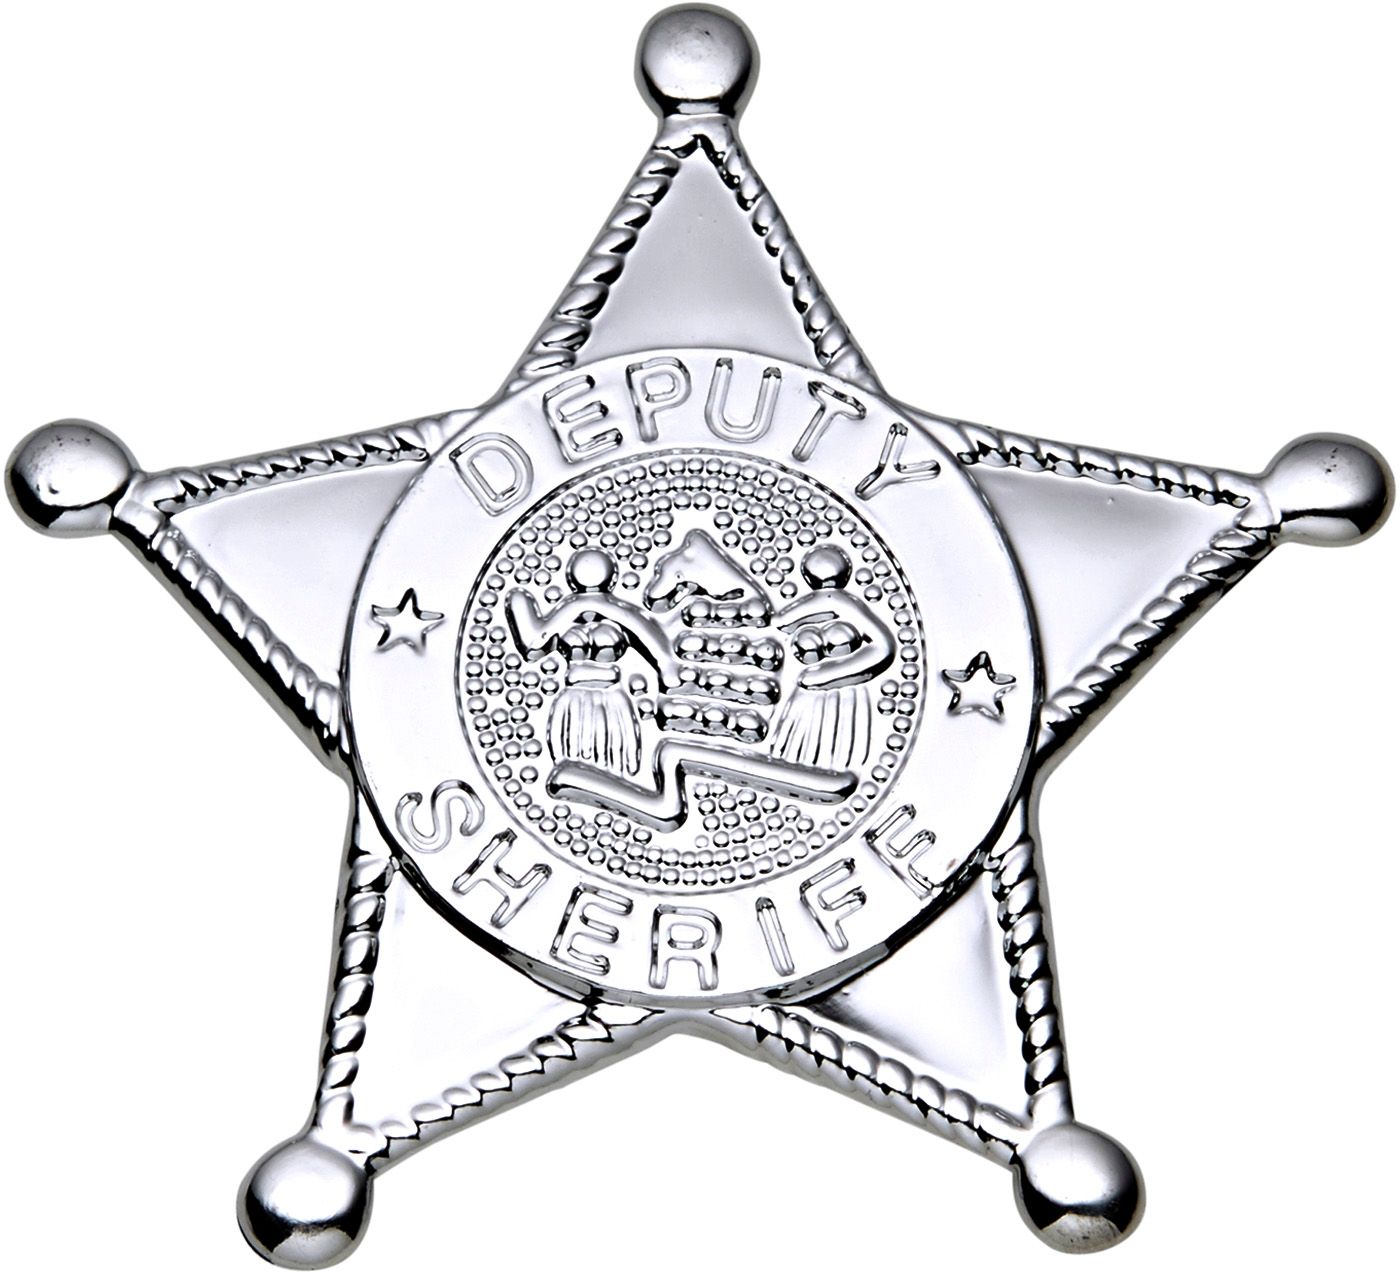 Politie badge